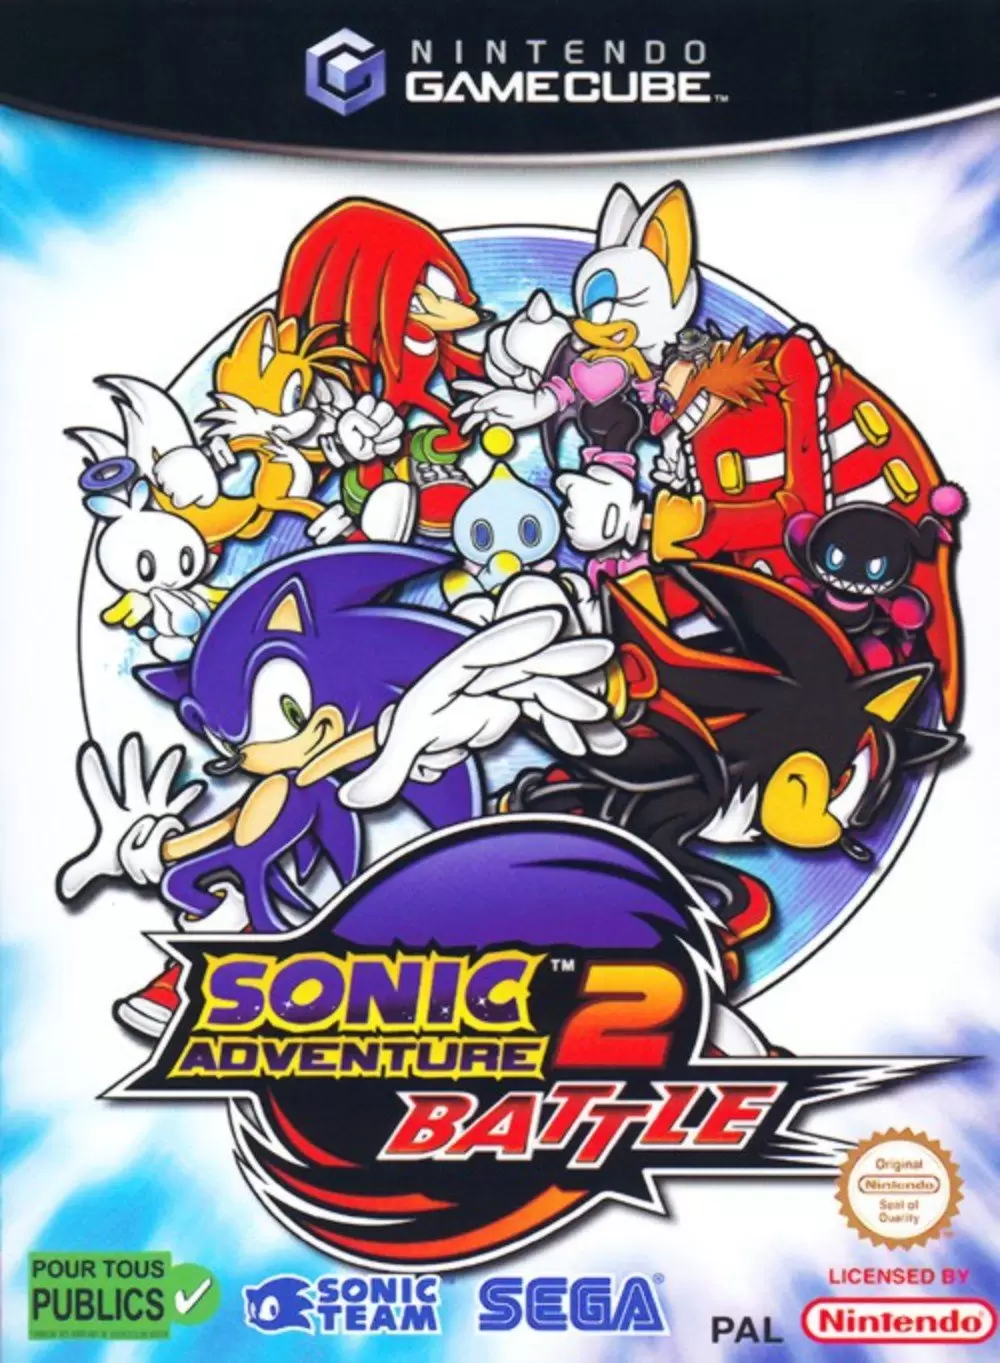 Nintendo Gamecube Games - Sonic Adventure 2 Battle